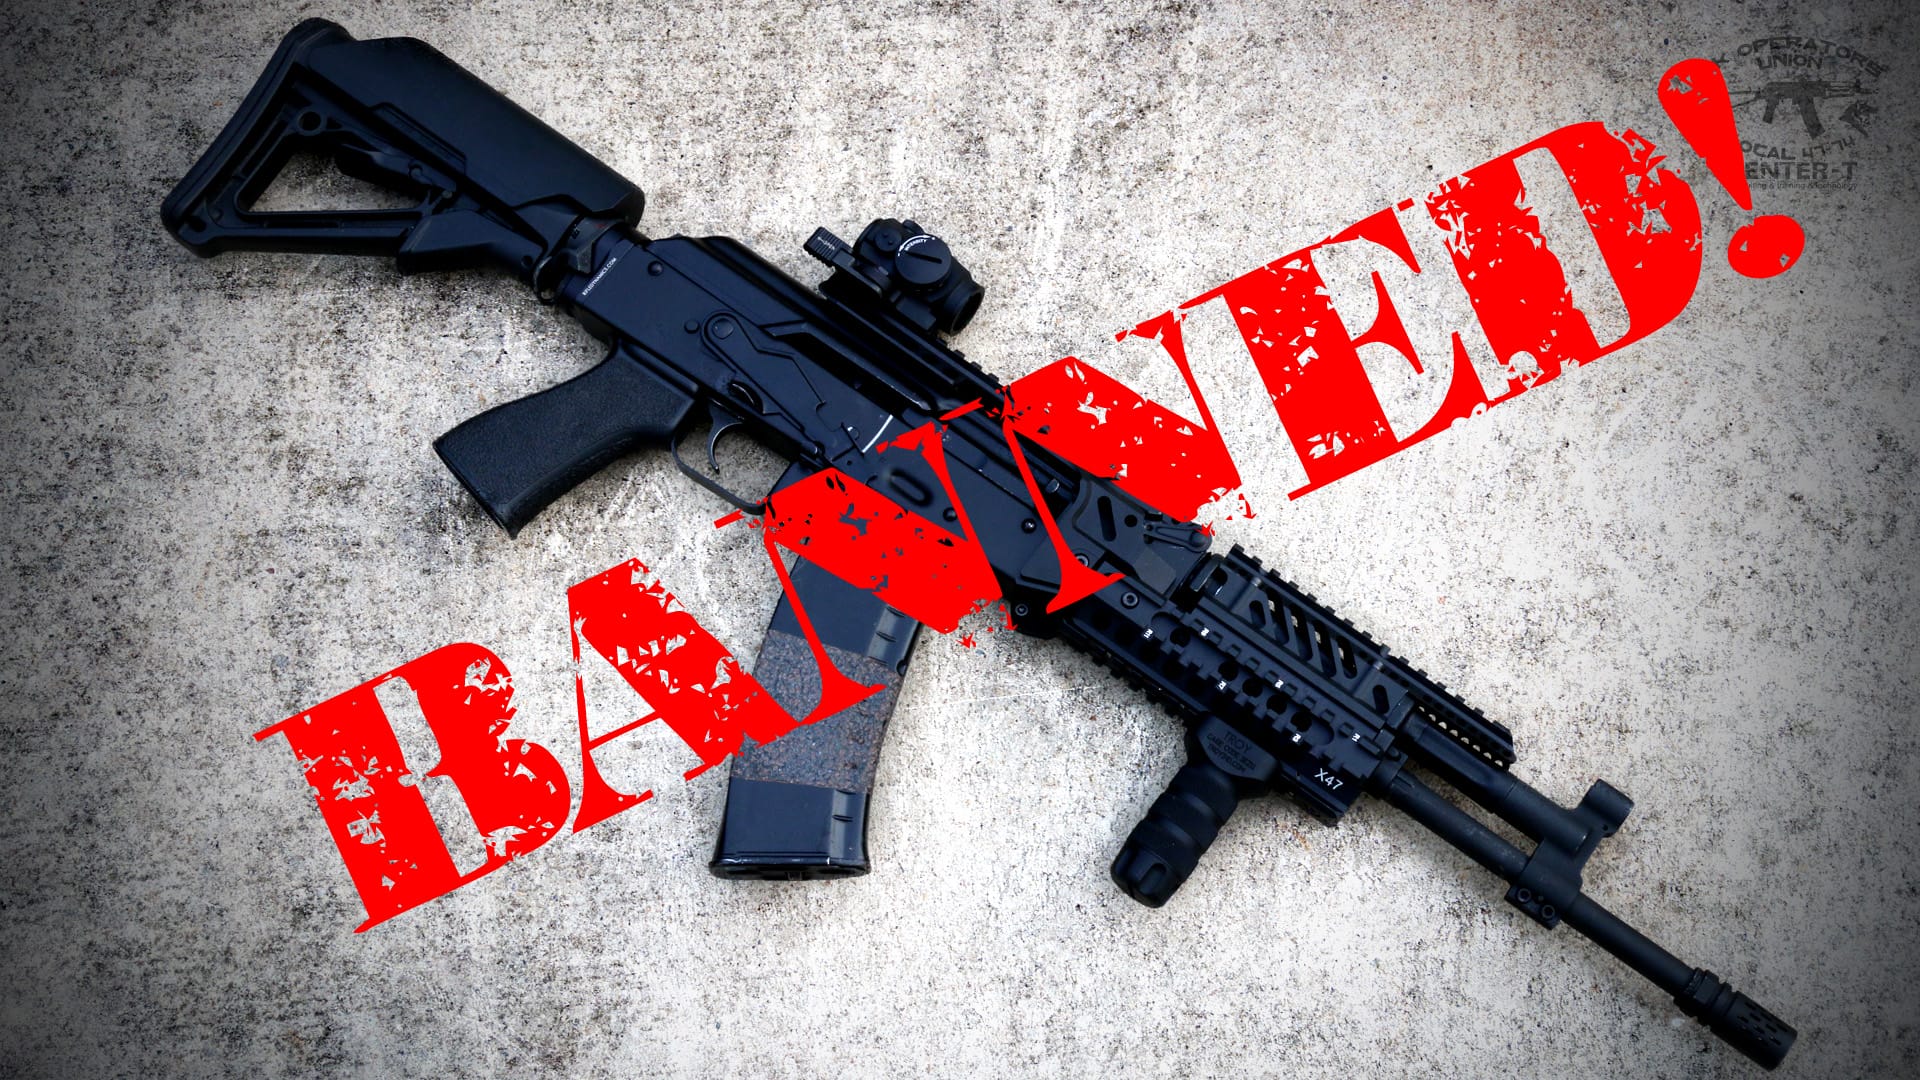 Kalashnikov import ban – AK Operators Union Take on it!